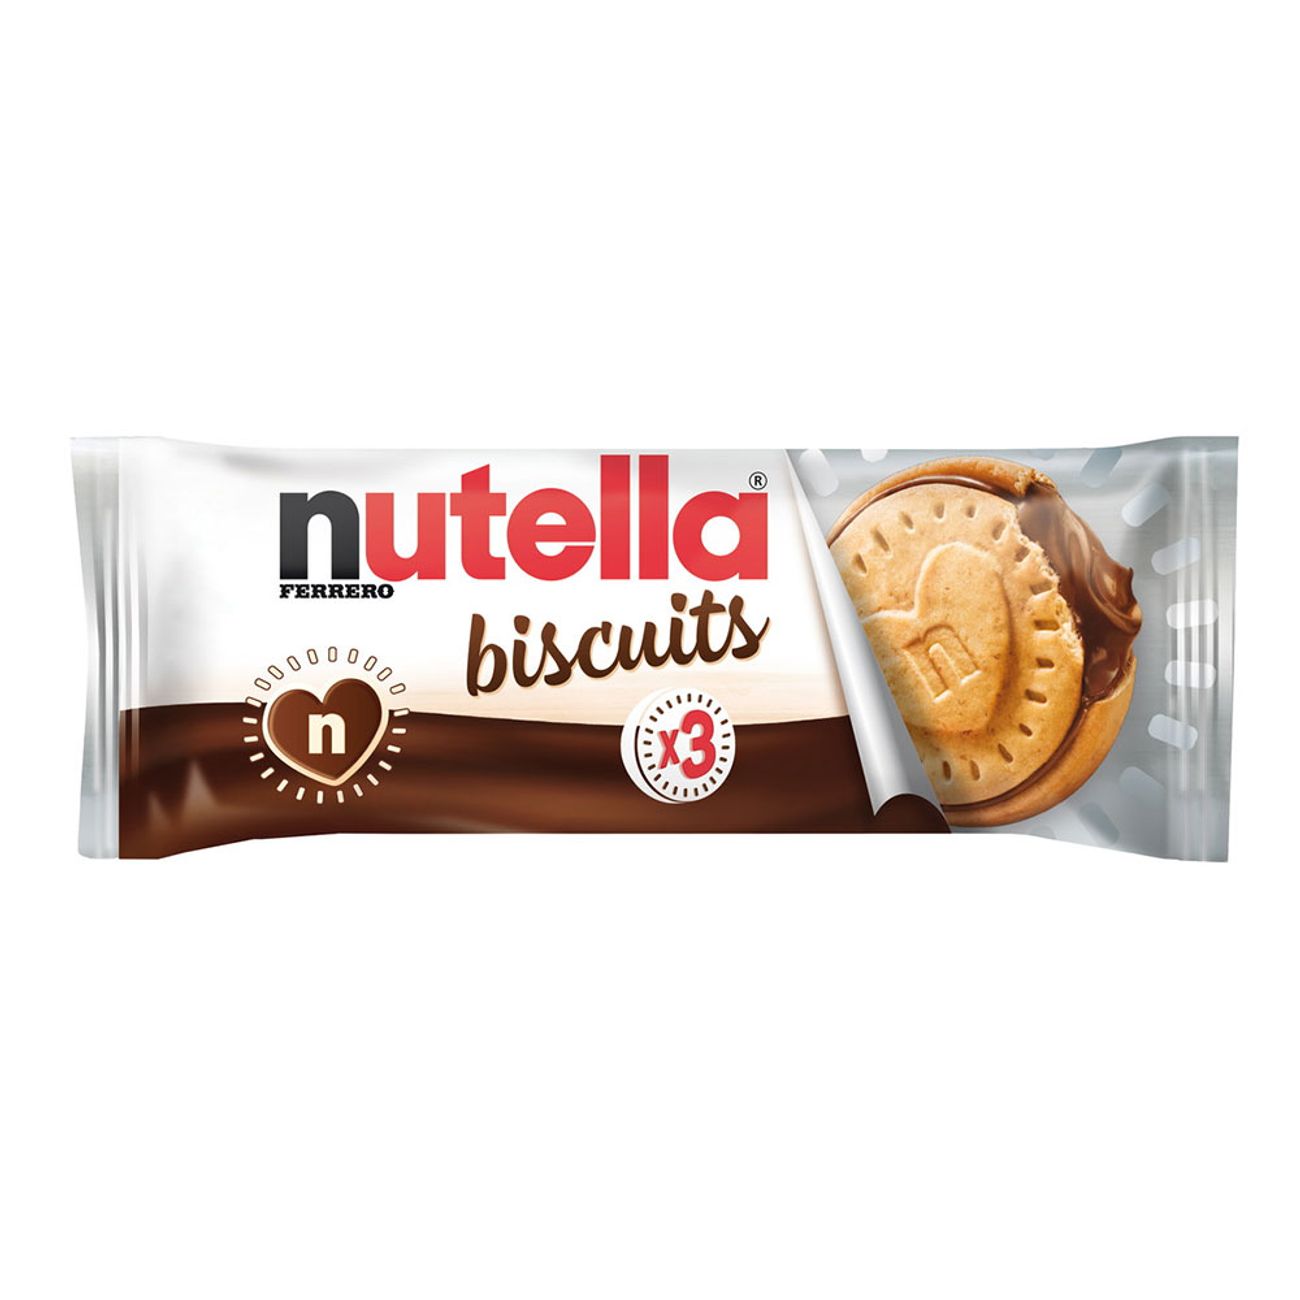 nutella-biscuits-80298-1